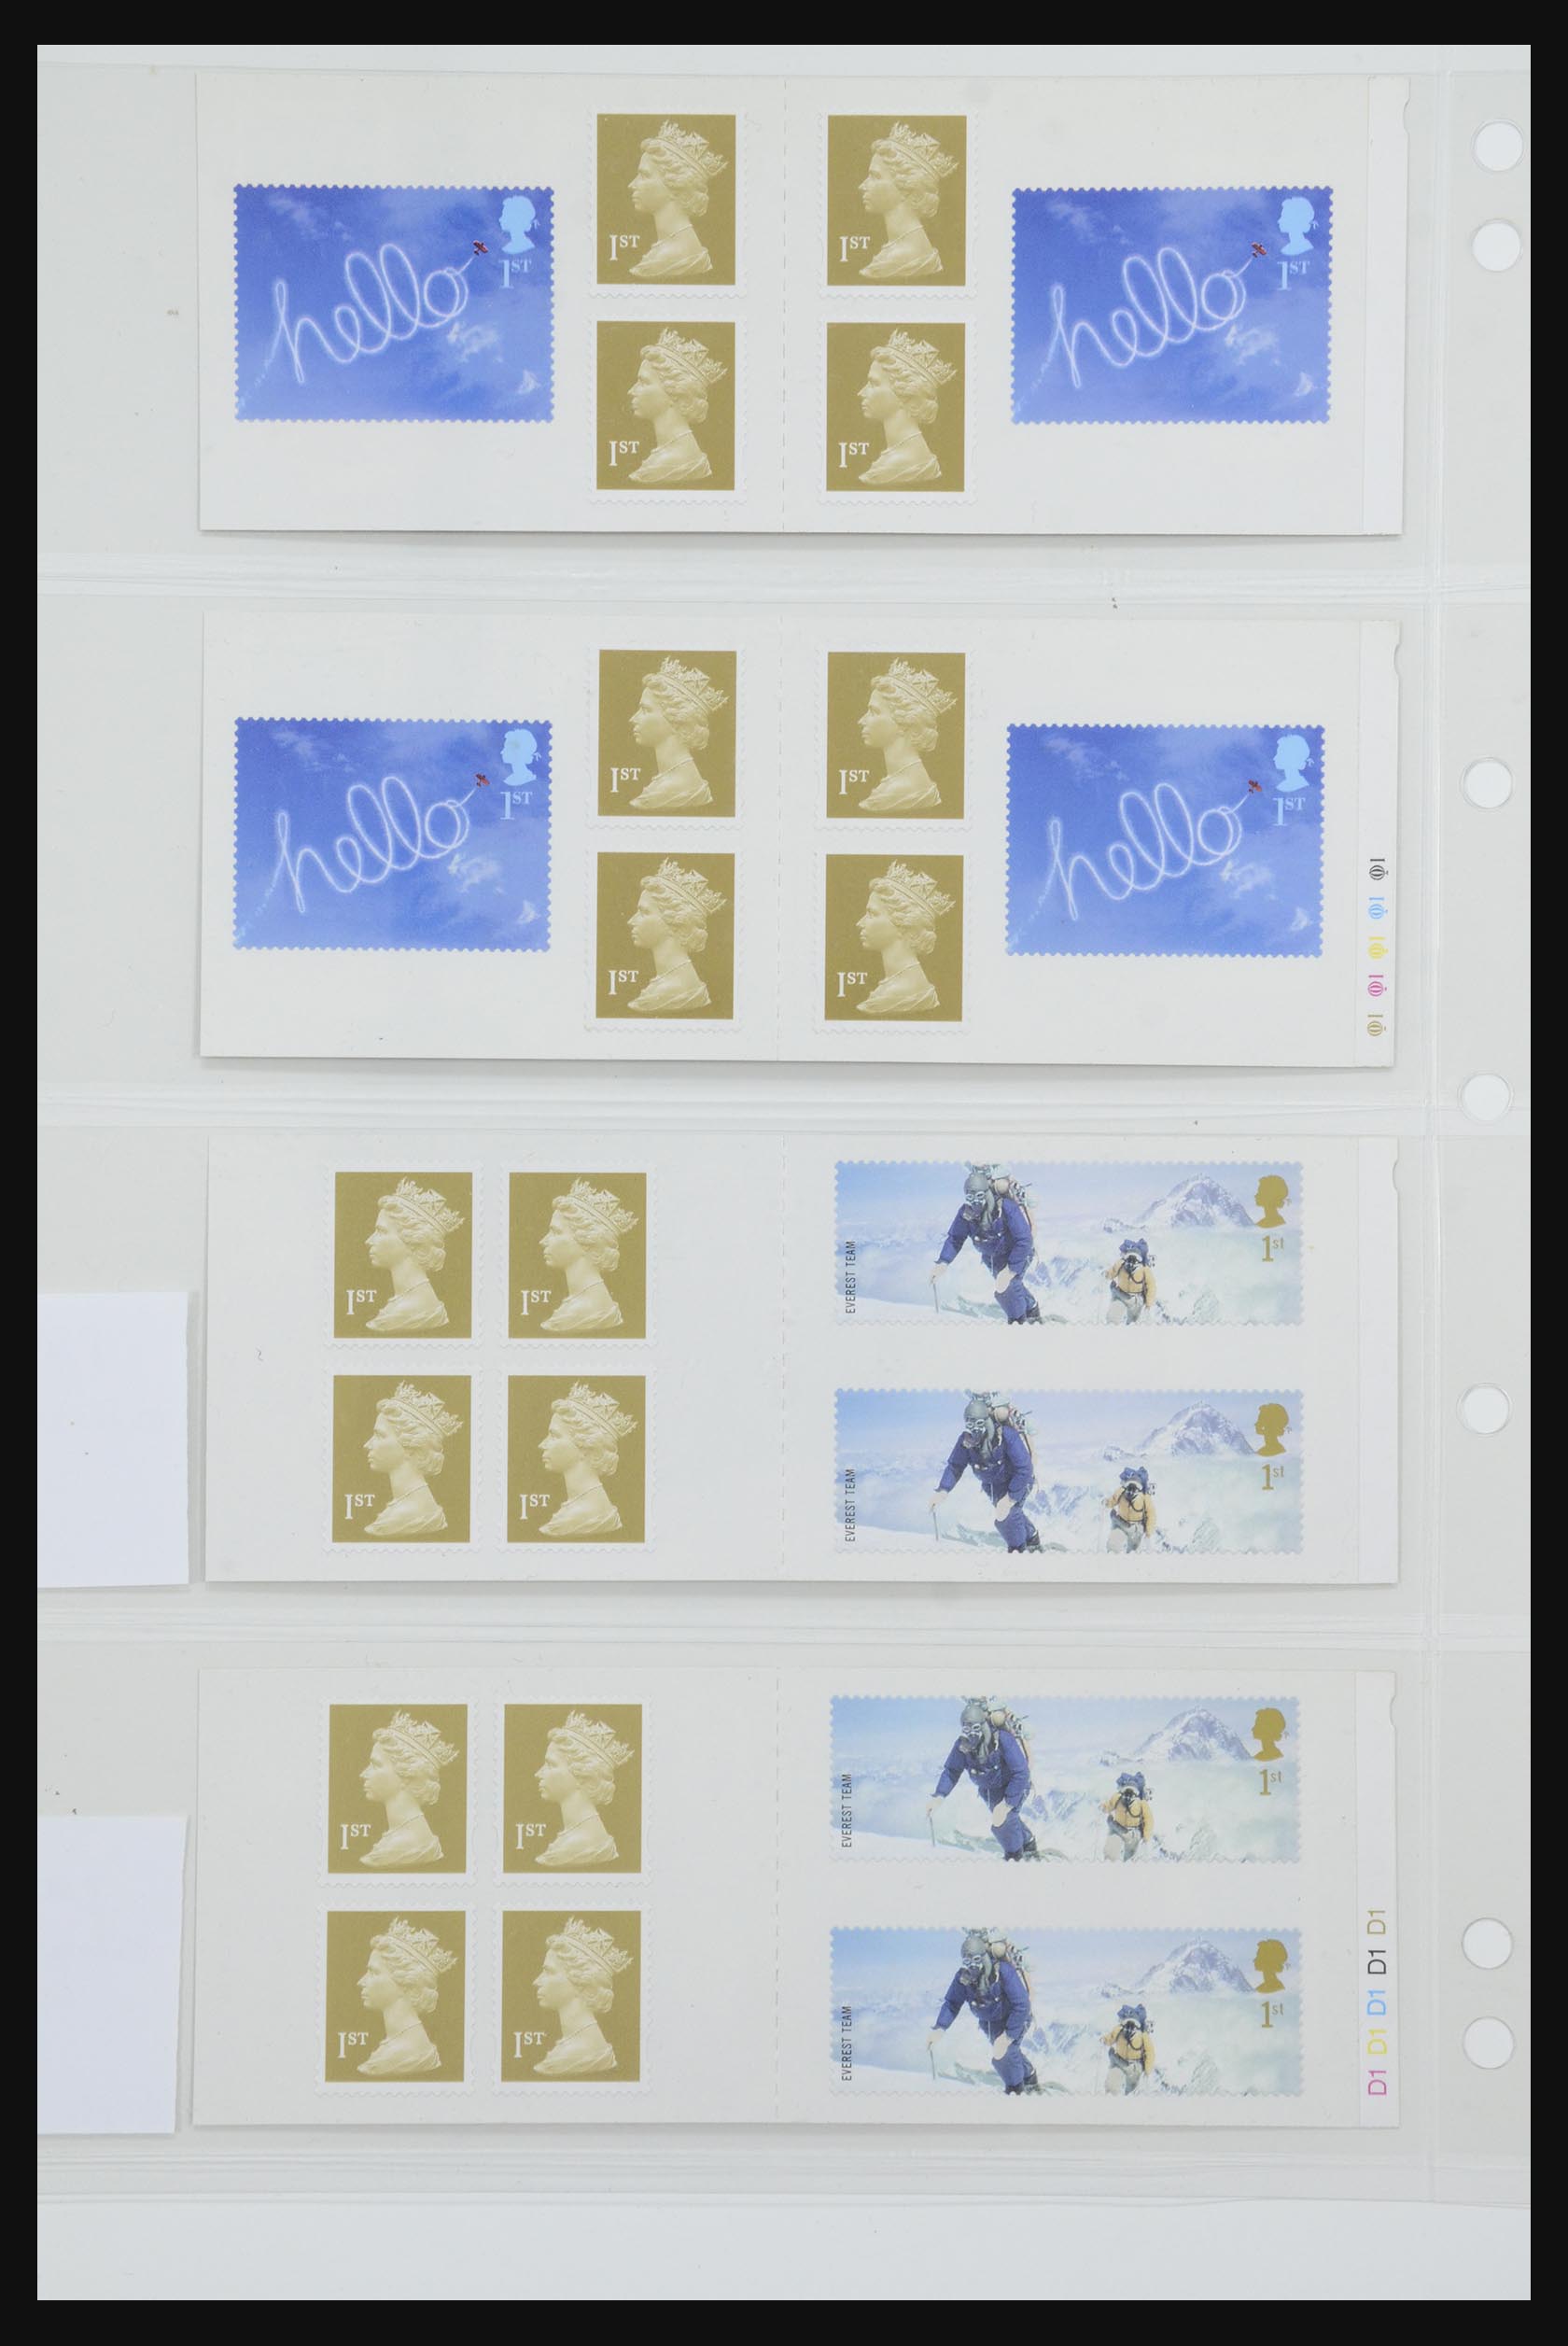 31959 370 - 31959 Great Britain stampbooklets 1987-2016!!